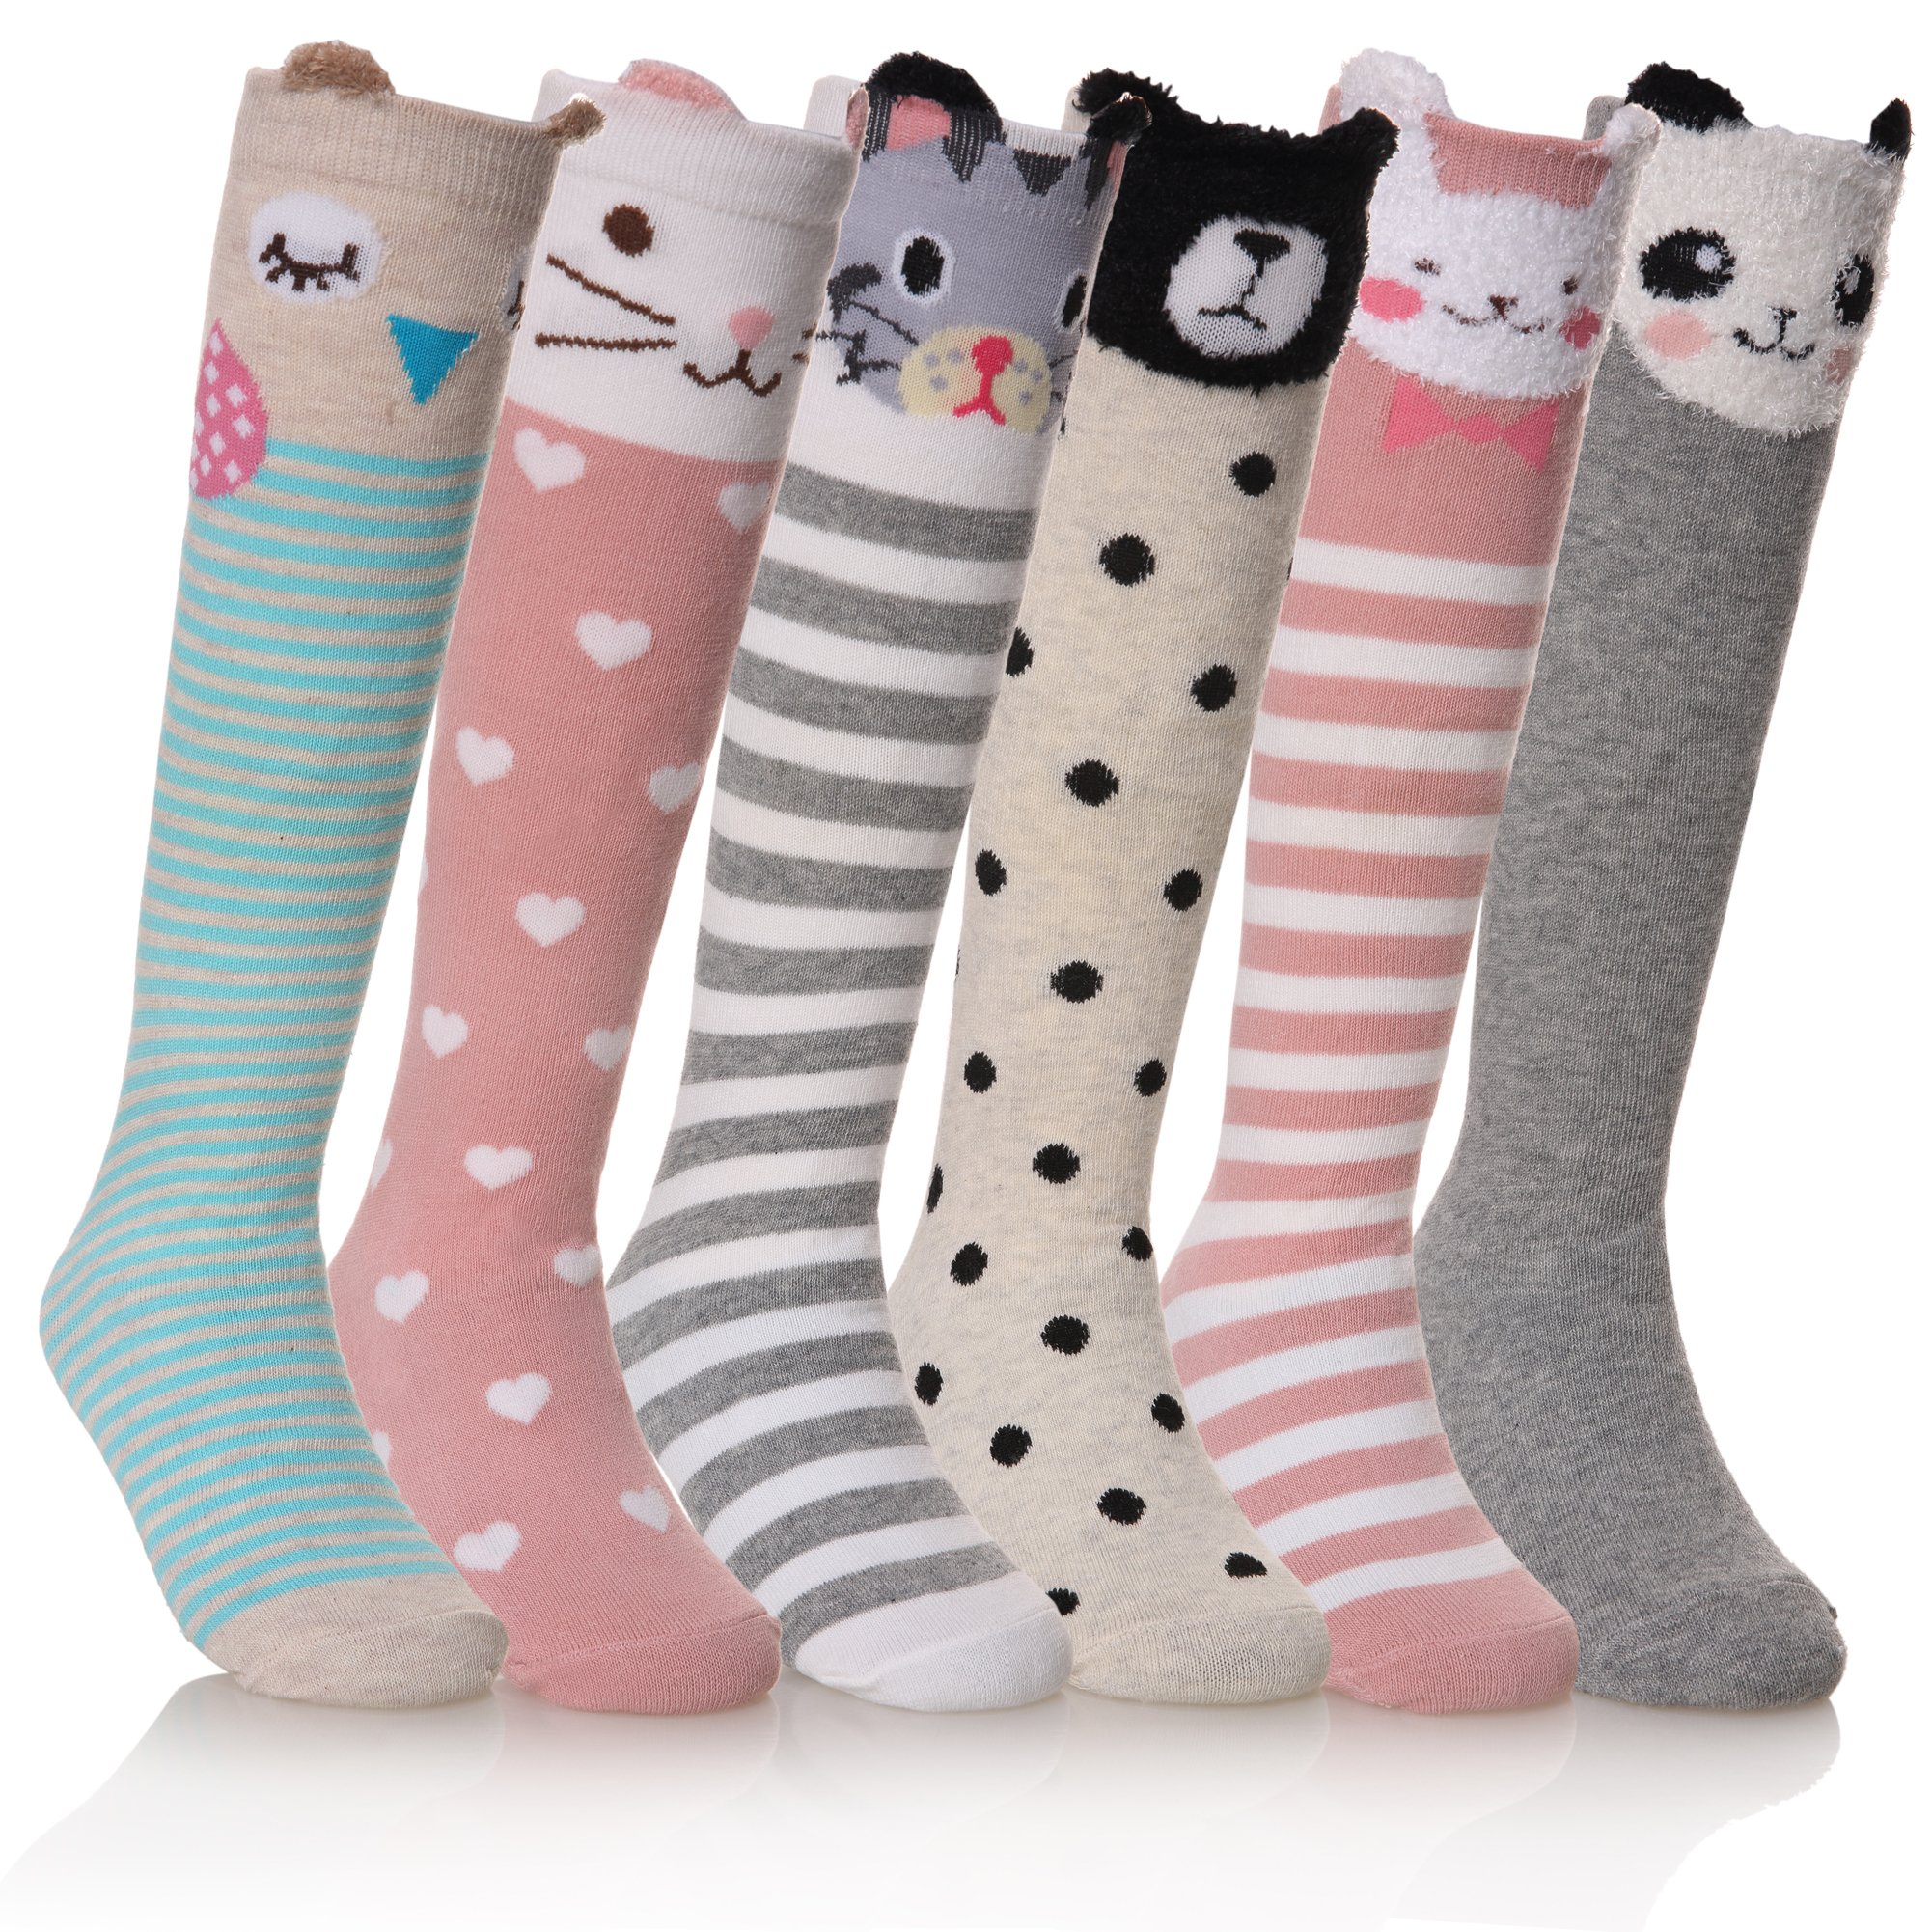 Book Cover FNOVCO Girls Knee High Socks Cartoon Animal Patterns Cotton Over Calf Socks 6 Pairs Animal